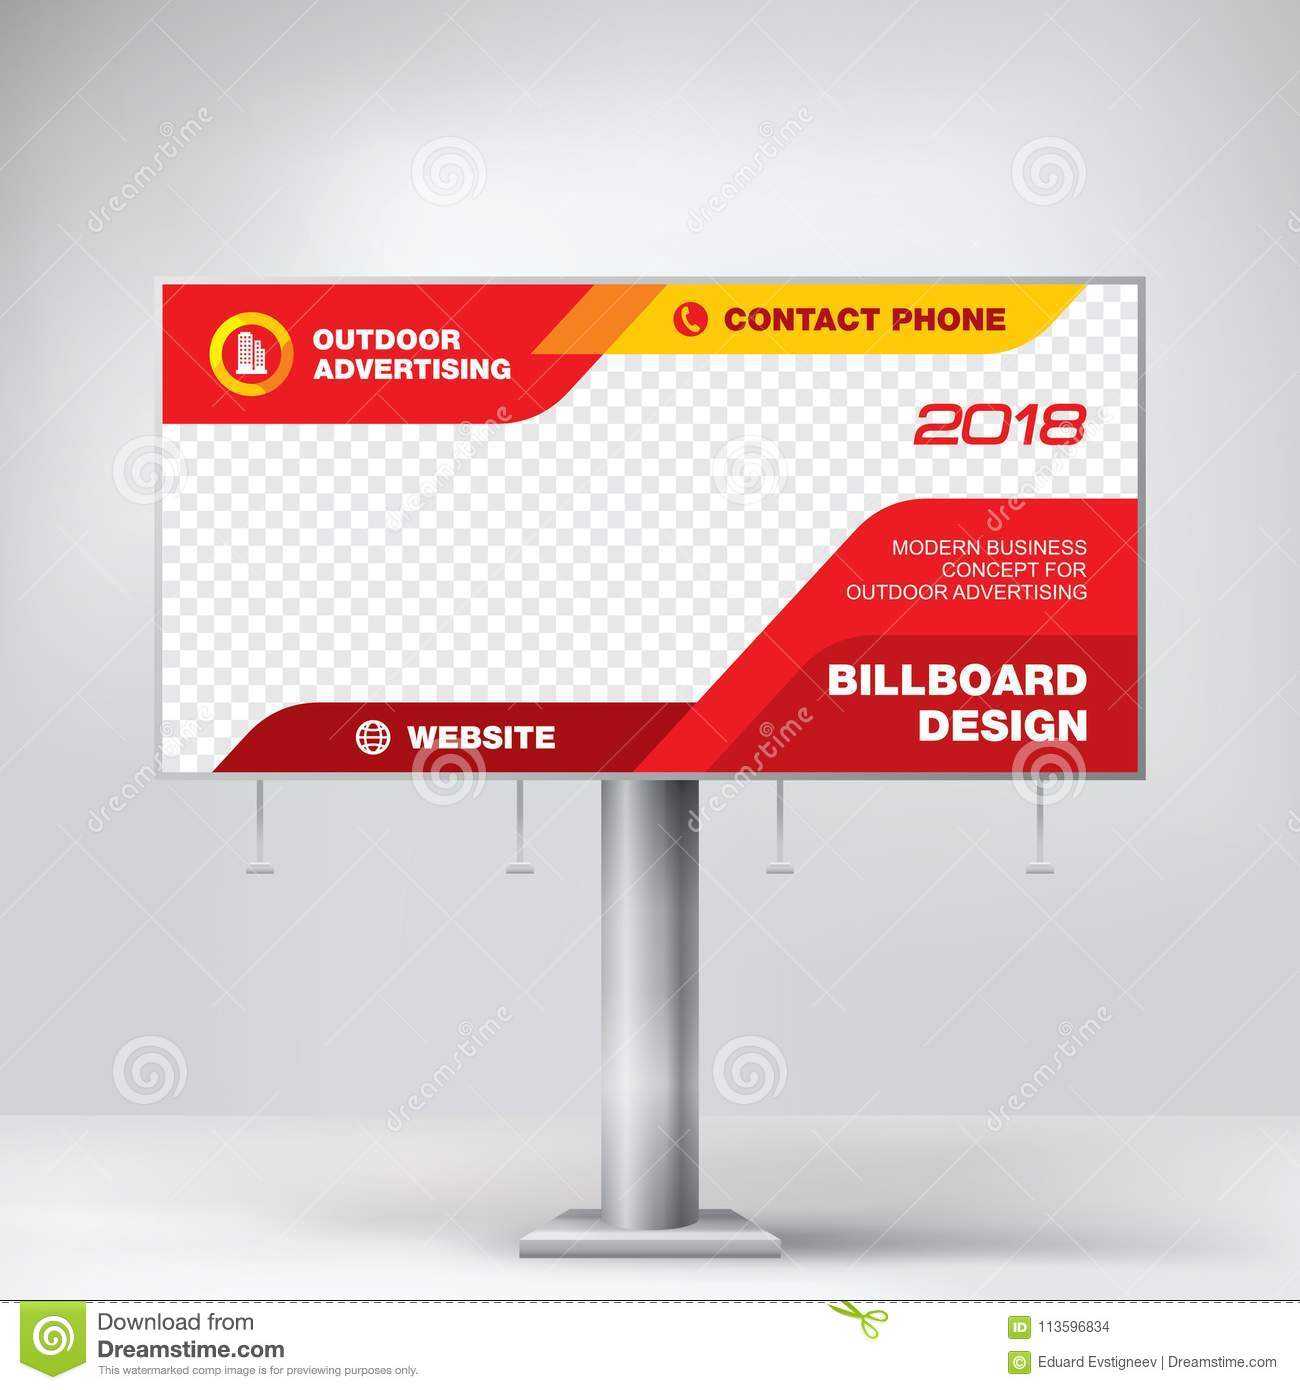 Billboard Design, Template Banner For Outdoor Advertising In Outdoor Banner Design Templates